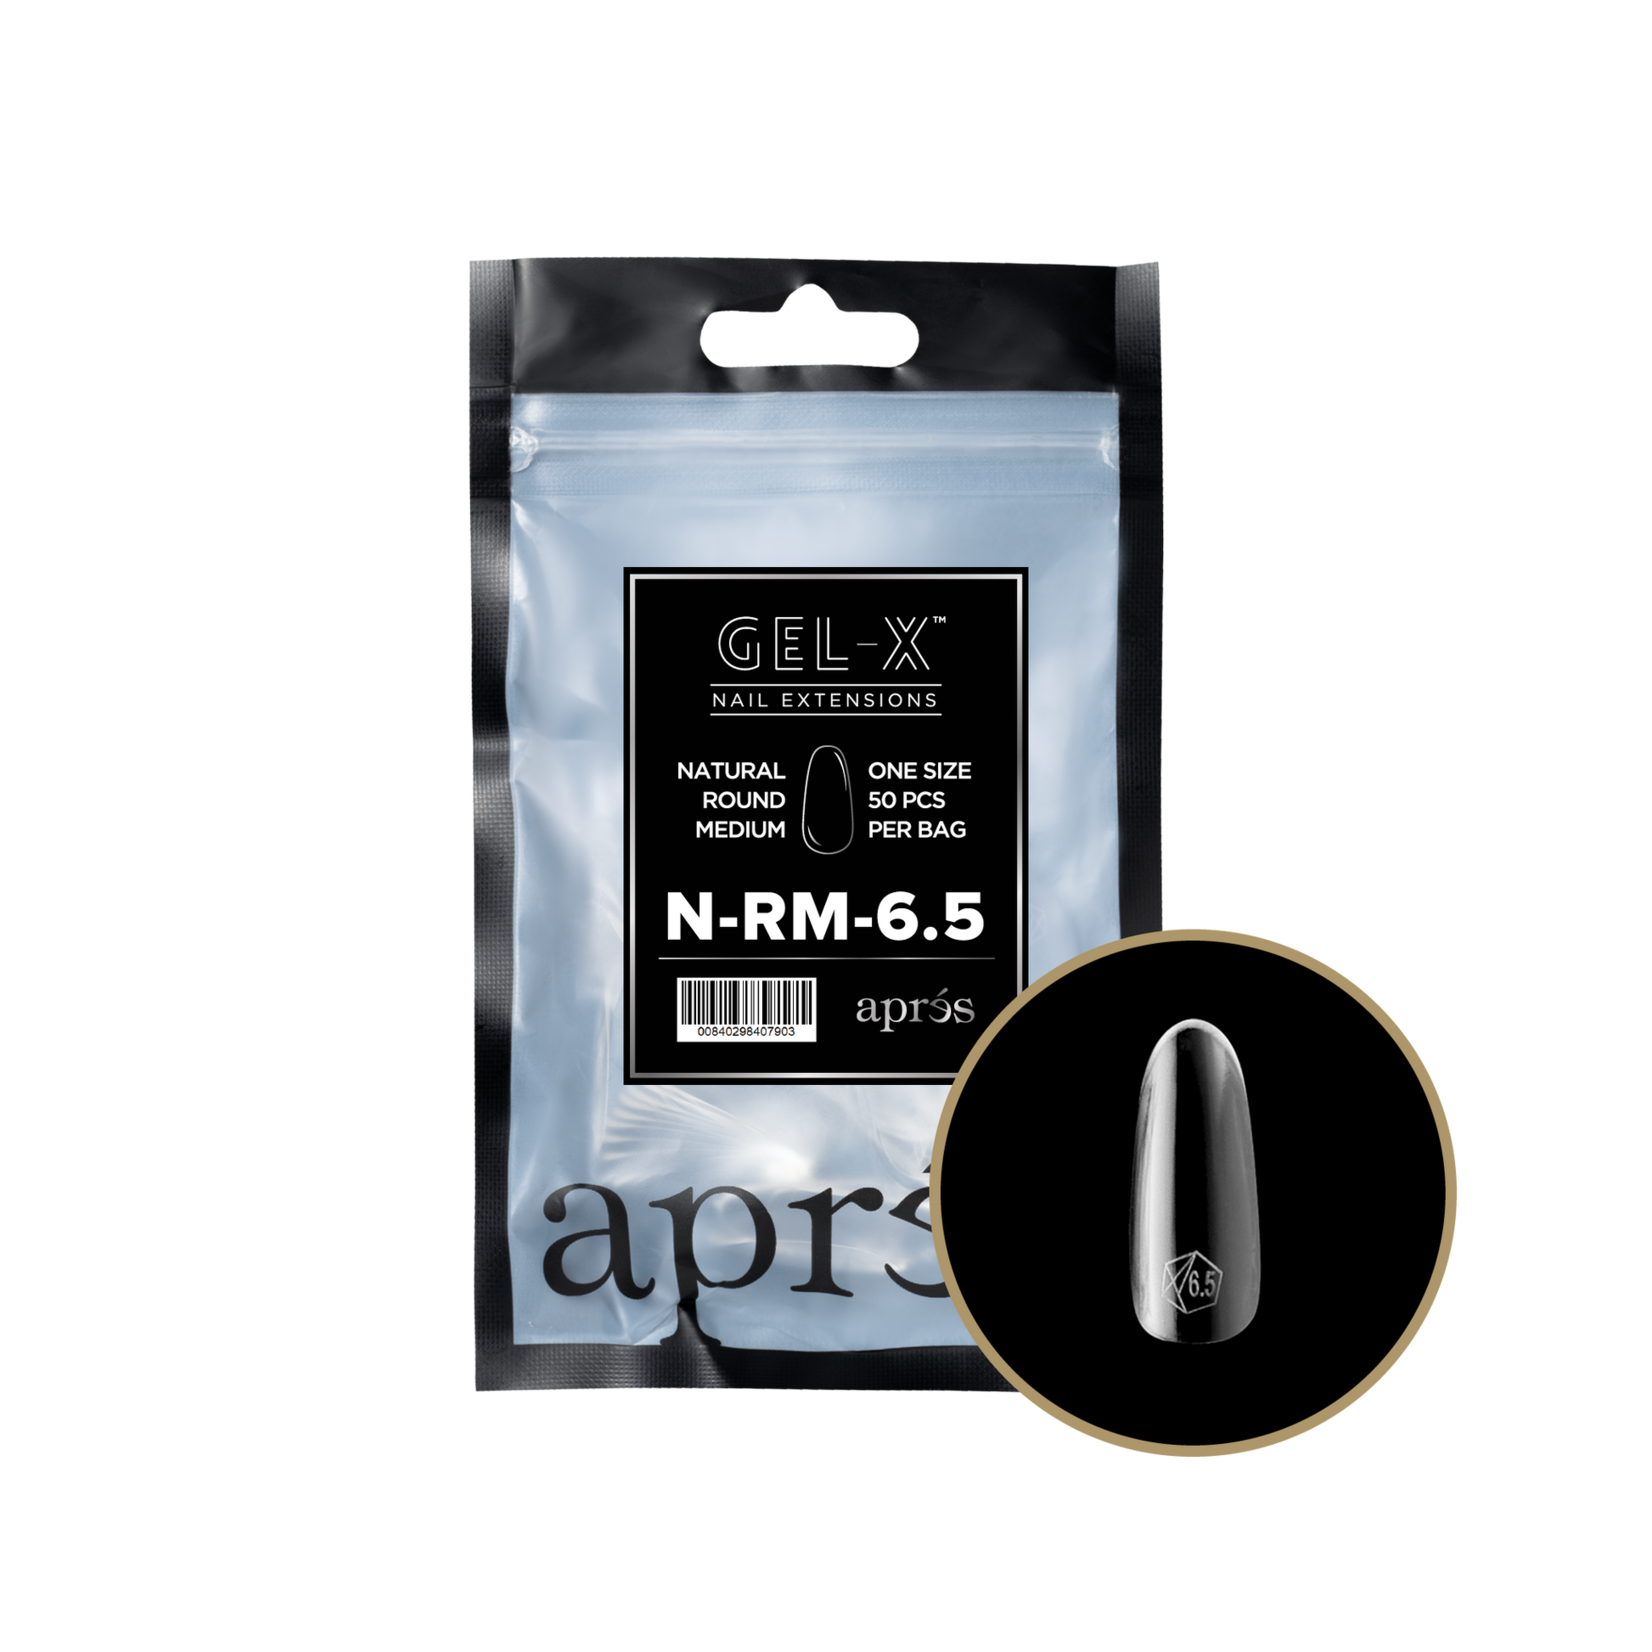 Apres Apres - Refill Bags - Natural - Round Medium - #6.5